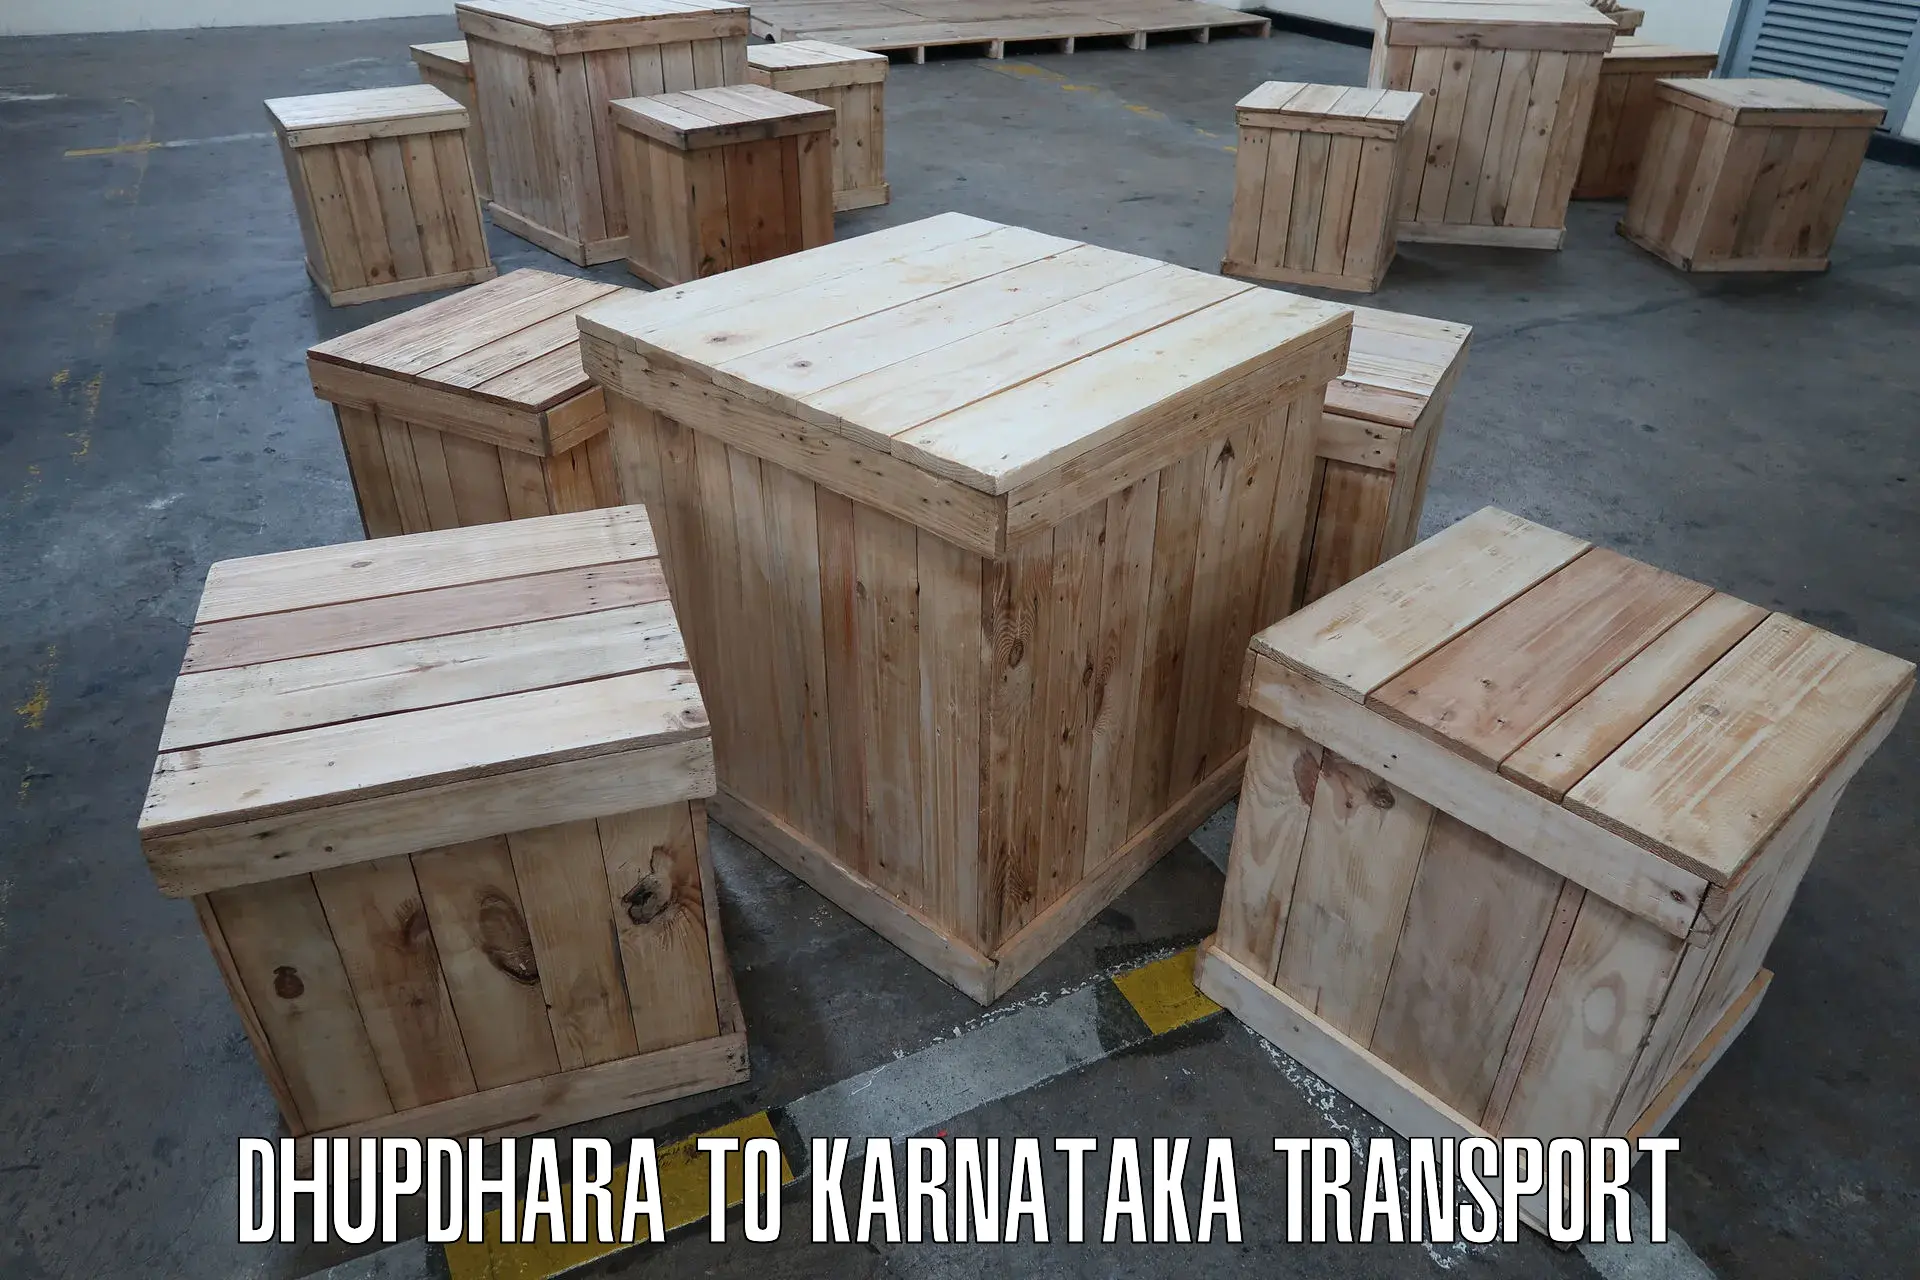 Truck transport companies in India Dhupdhara to Koppa